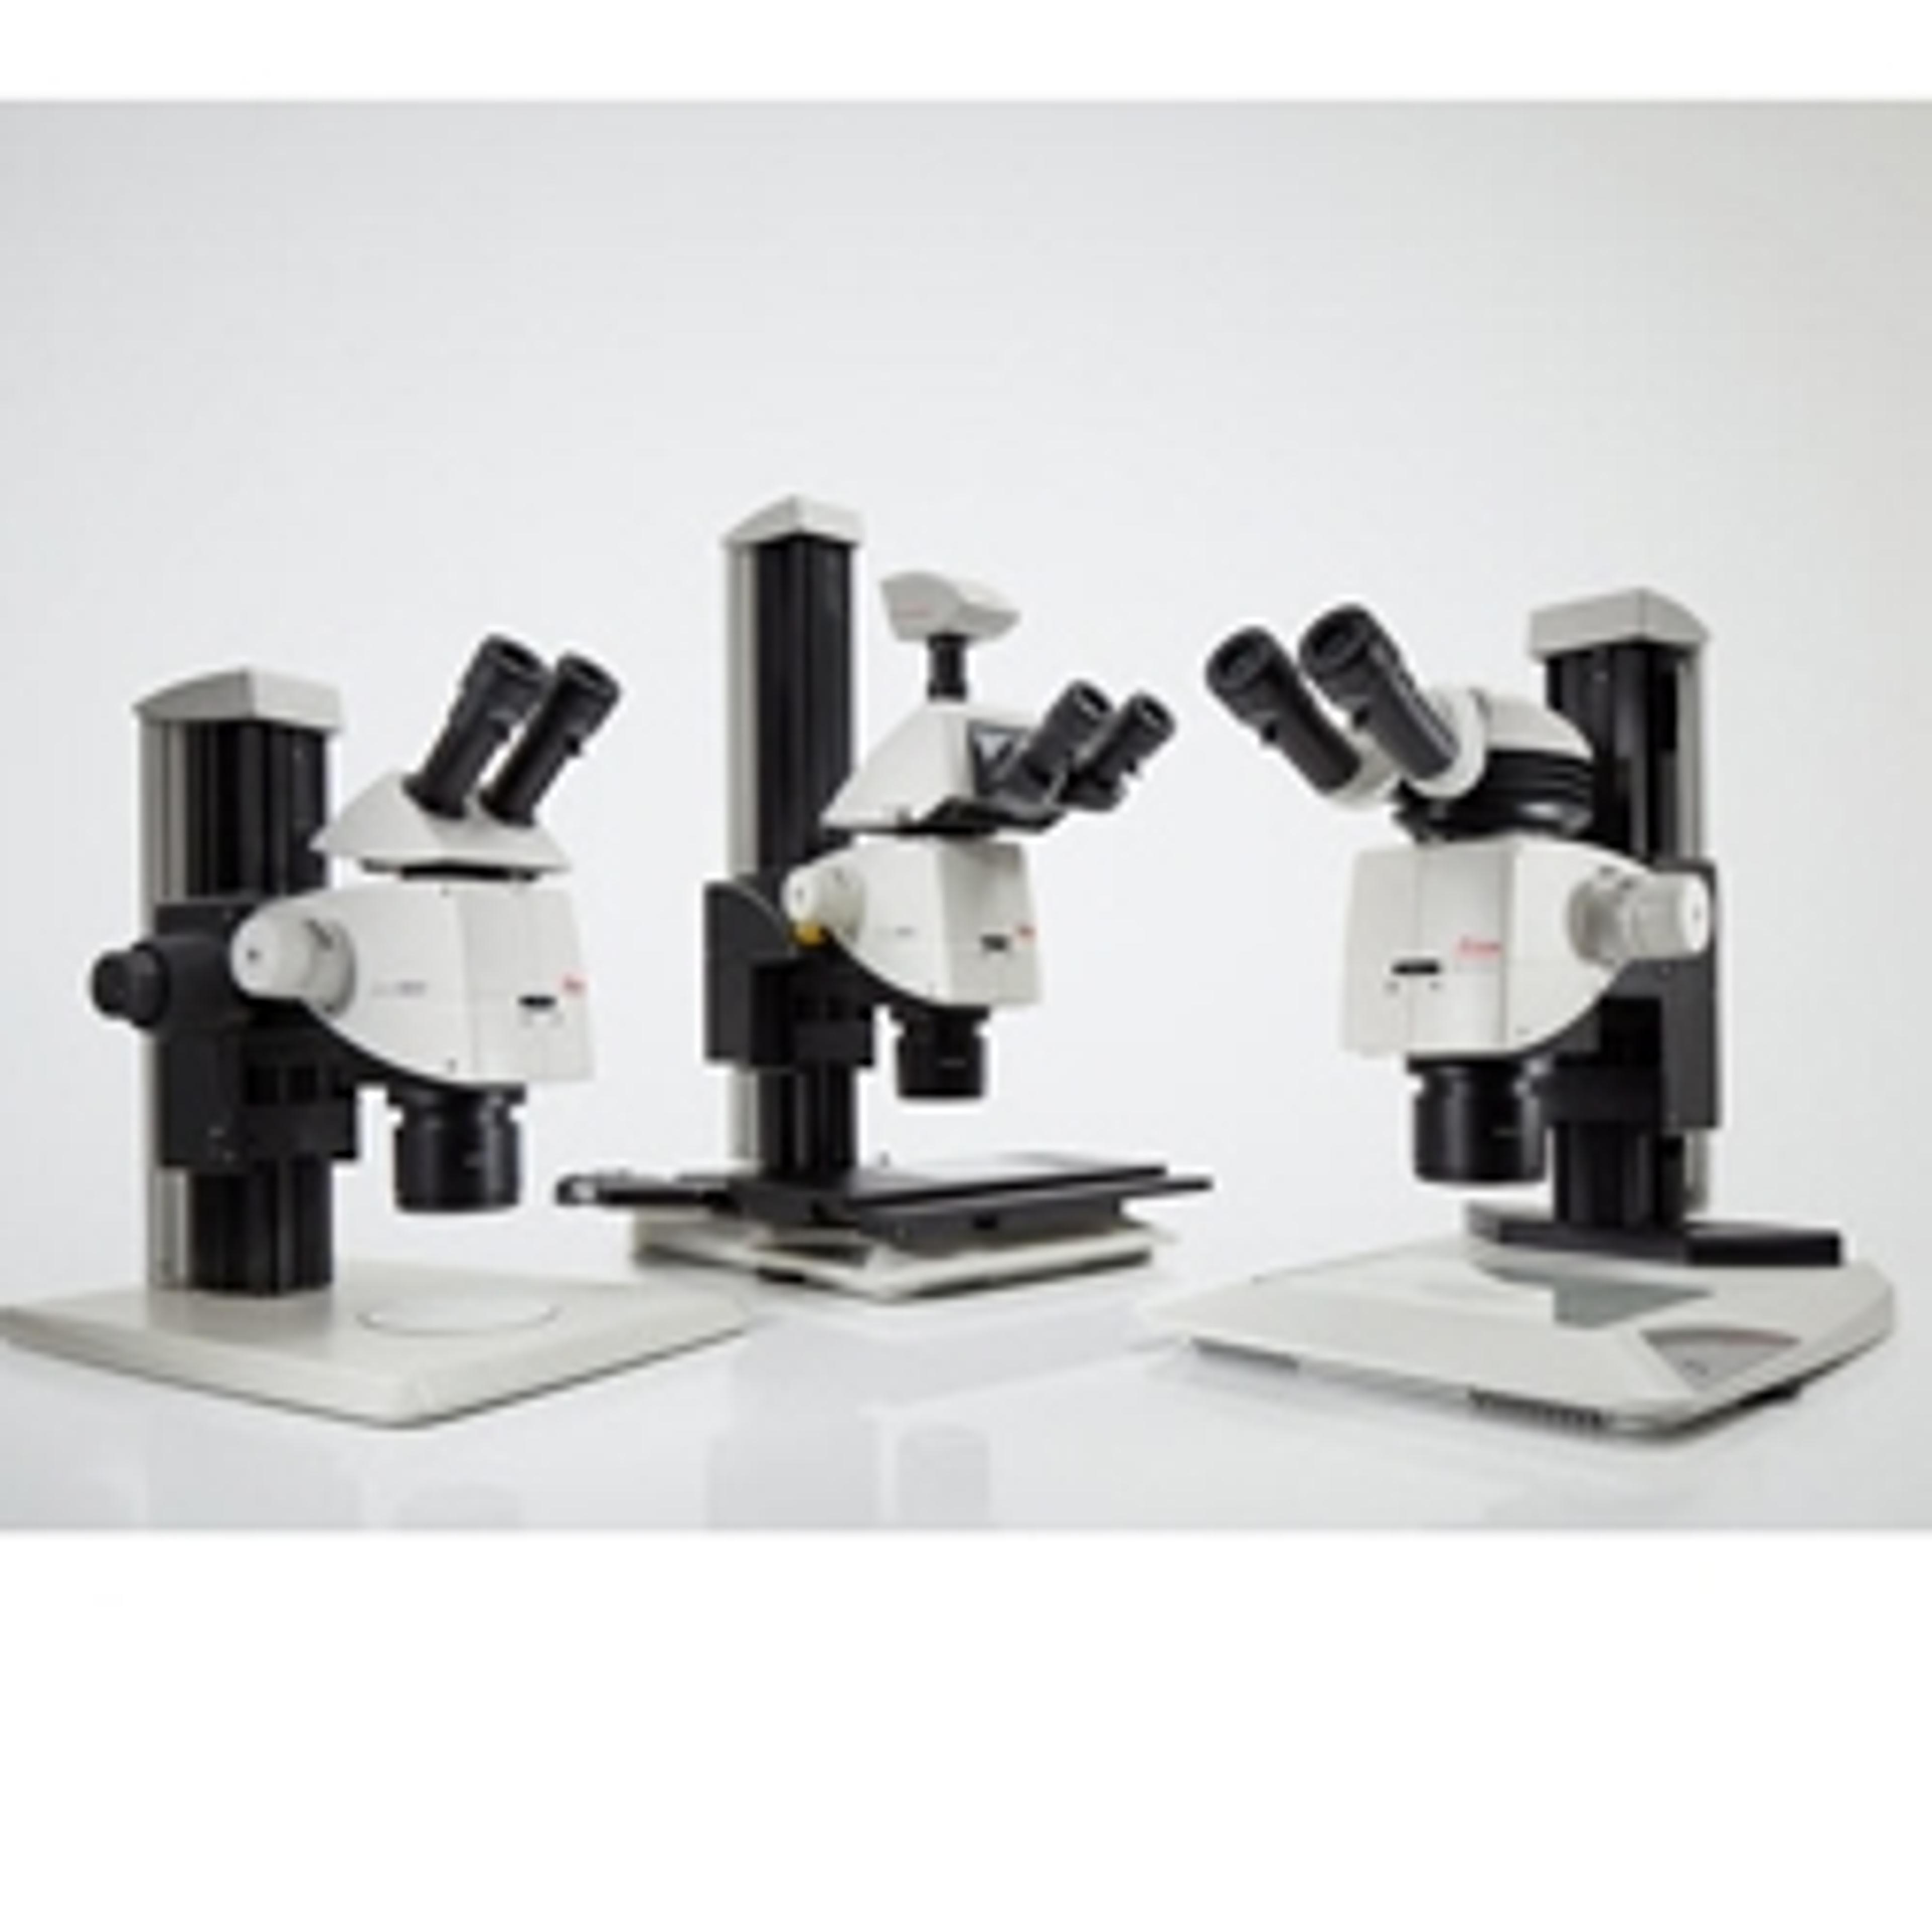 Leica encoded stereo microscopes